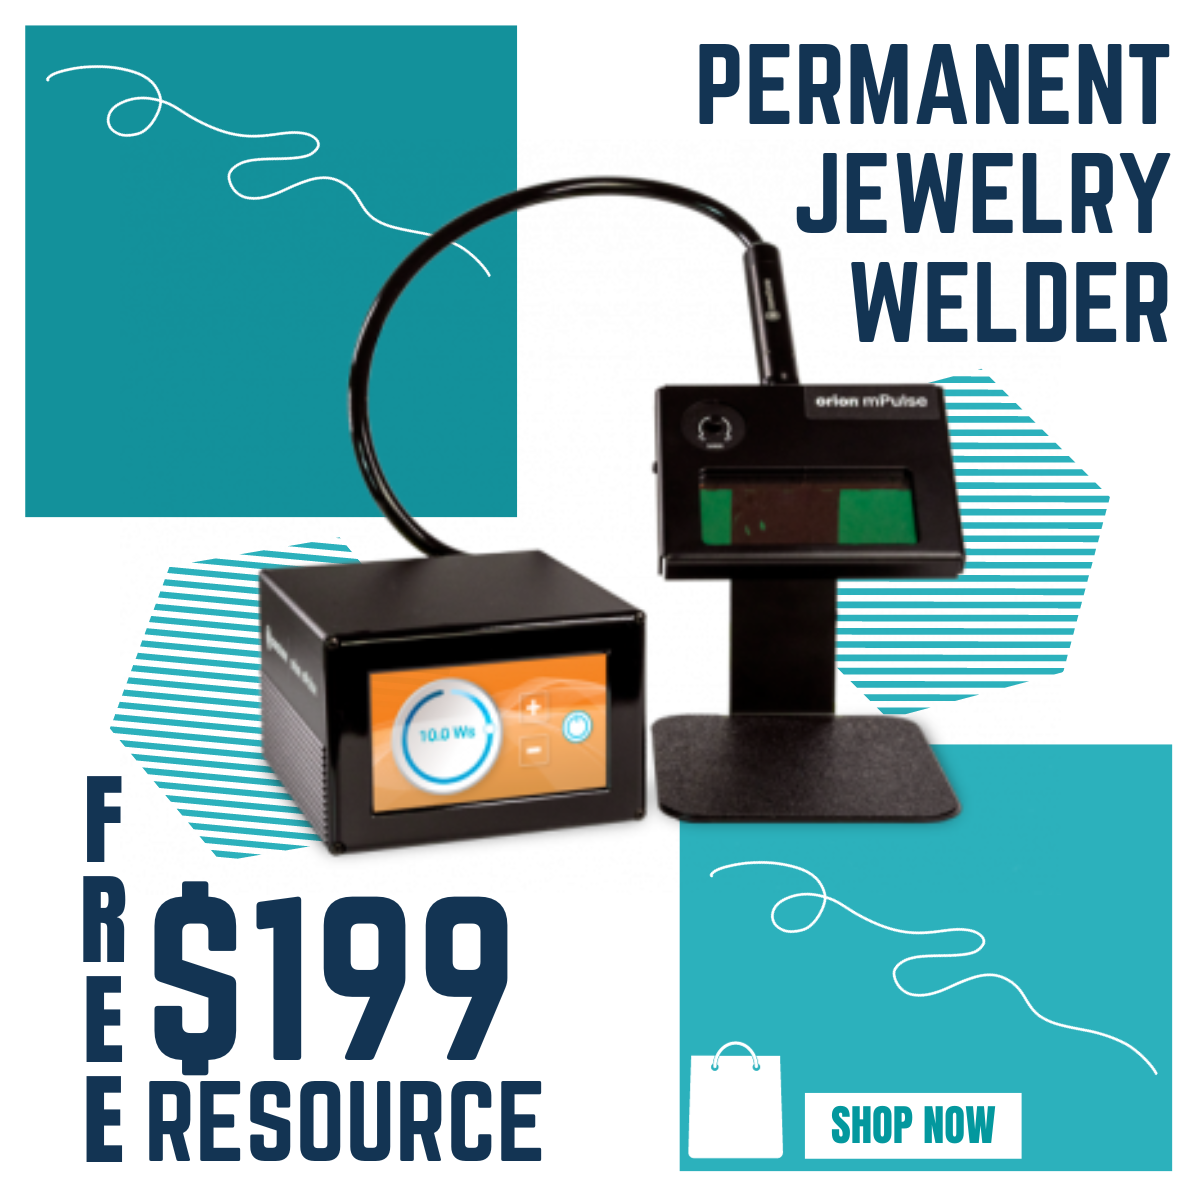 Permanent Jewelry Business Starter Kit, Permanent Jewelry Consent Forms, Permanent  Jewelry Warranty Card, Permanent Jewelry Instagram Posts 